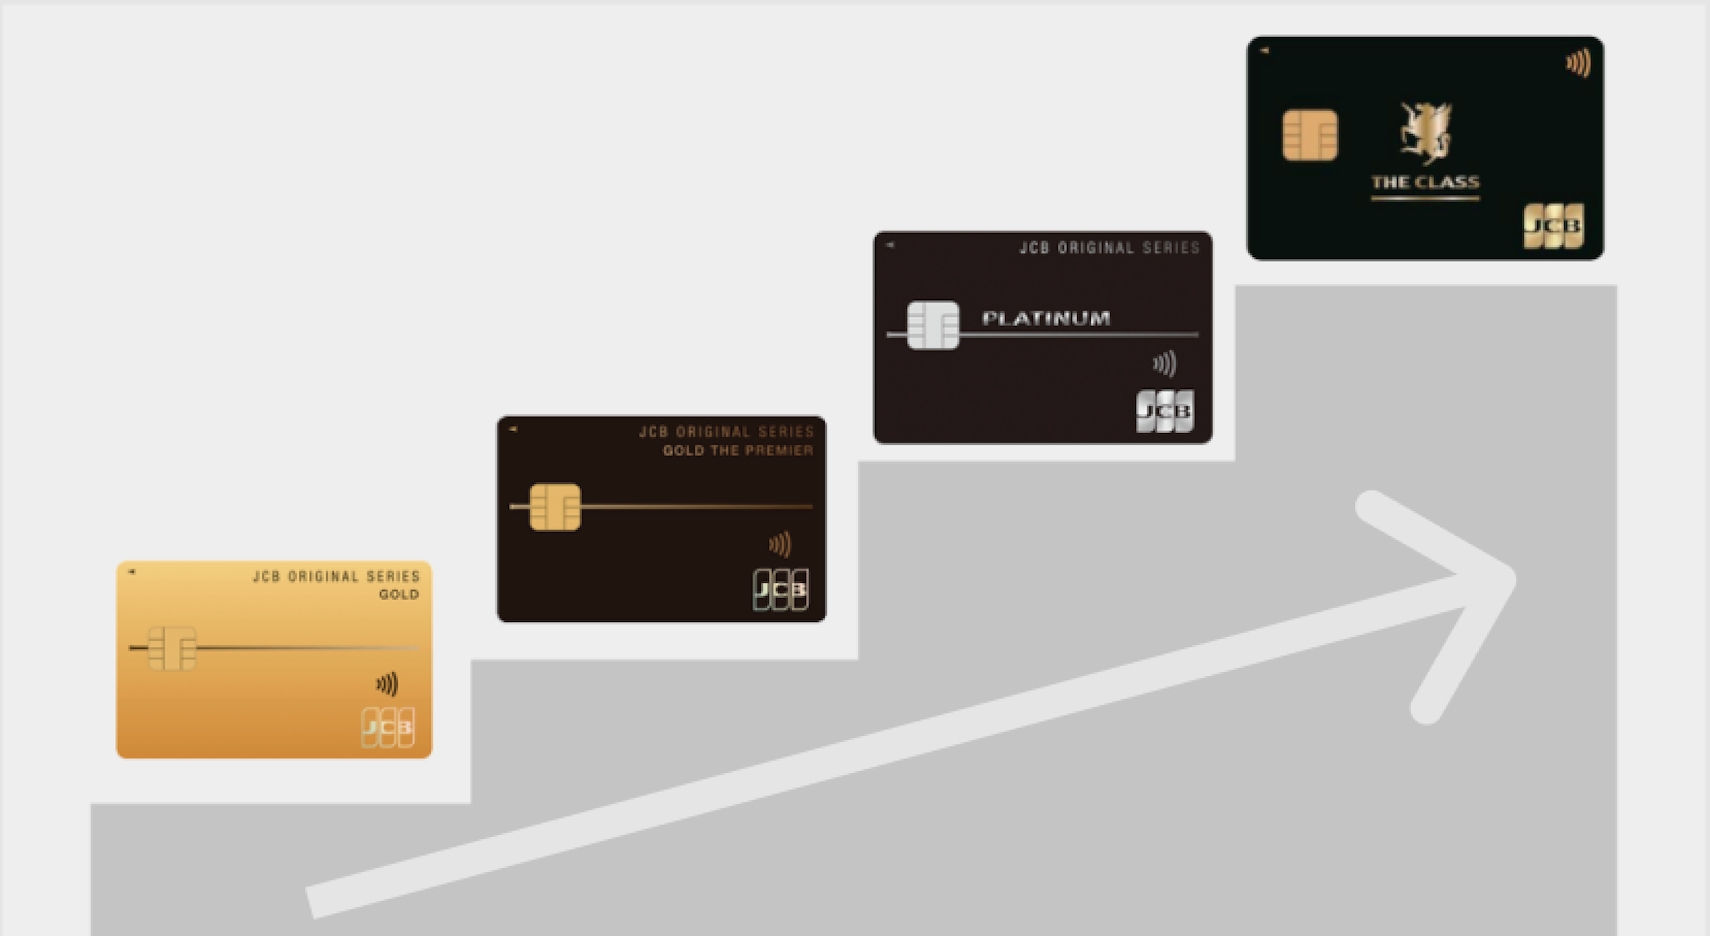 JCBゴールド ザ・プレミアはステータスカード！インビテーション・限度額・評価を解説 - クレジットカード - MONEY BEST